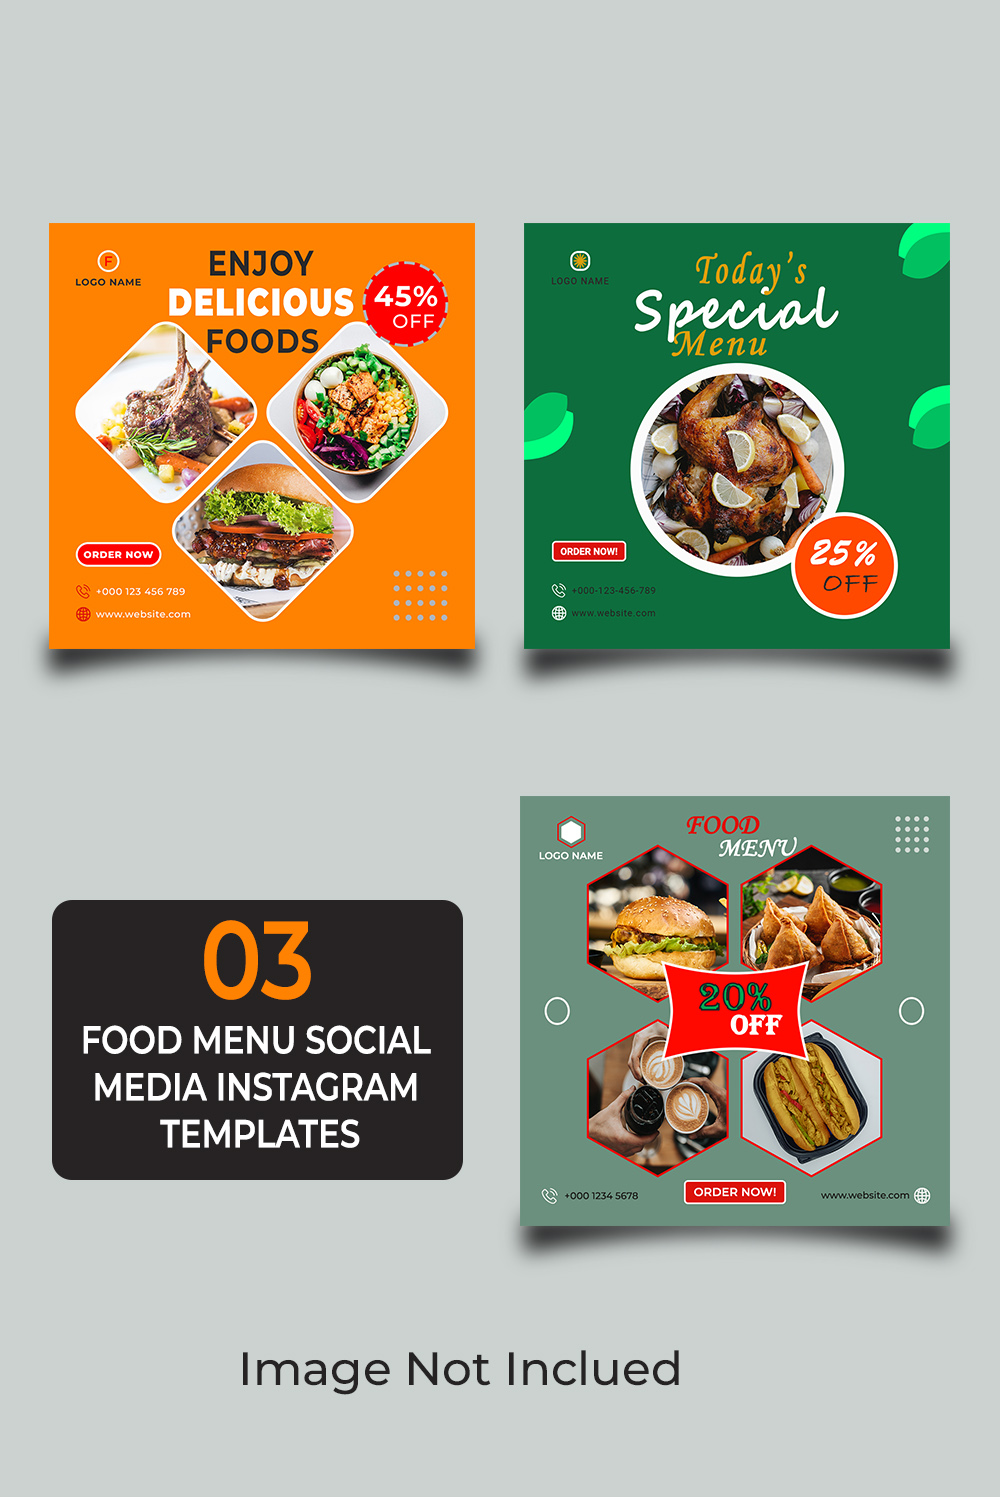 3 Food Menu Social Media Instagram Templates pinterest preview image.